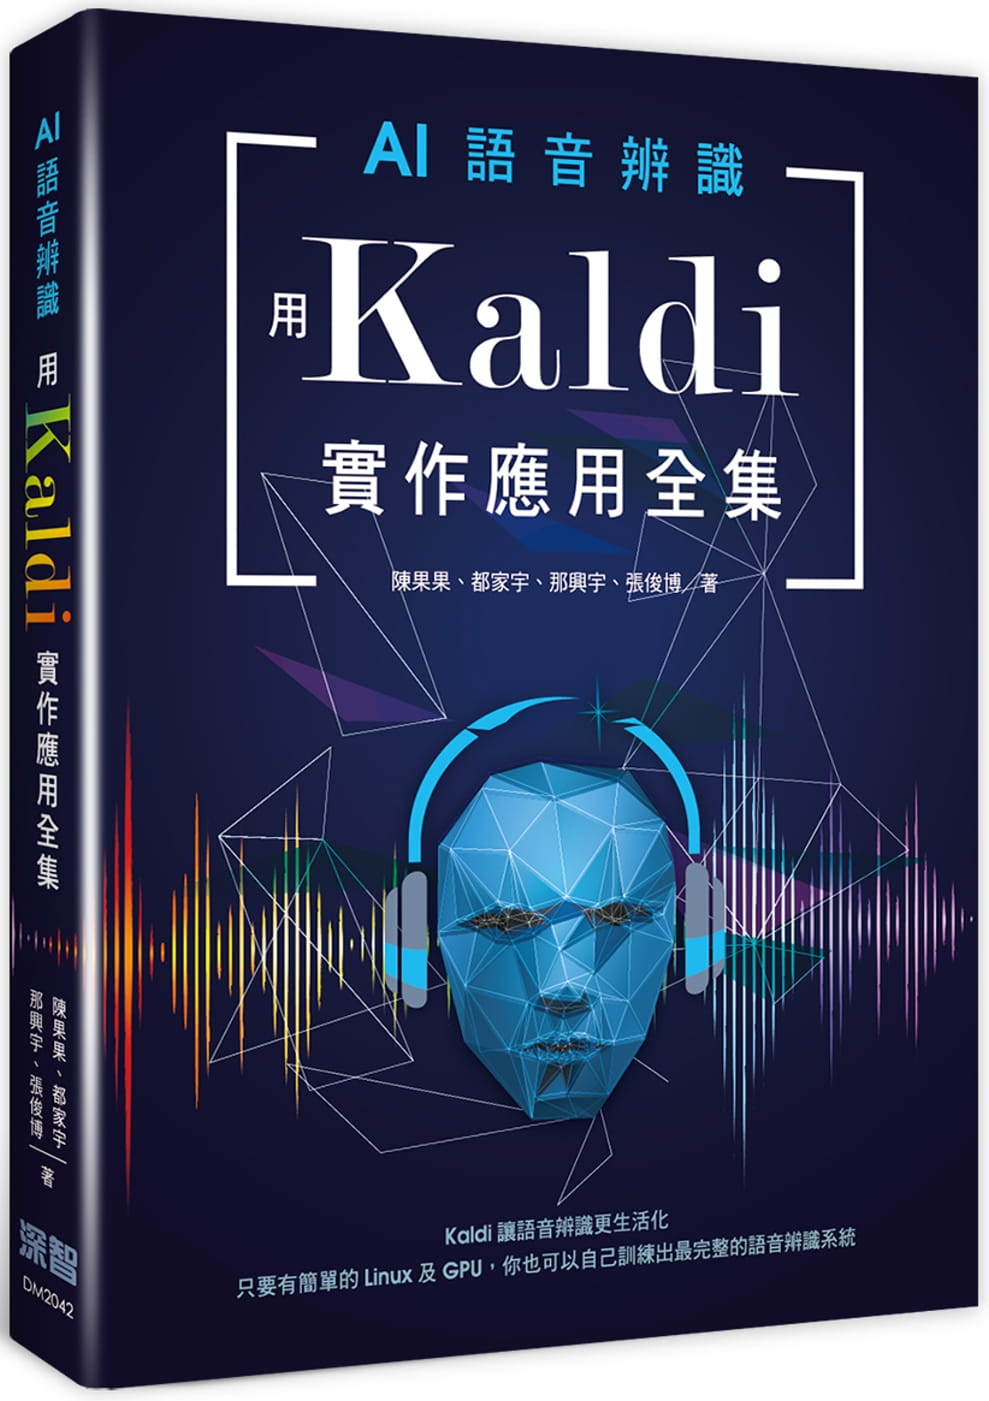 AI語音辨識：用Kaldi實作應用全集